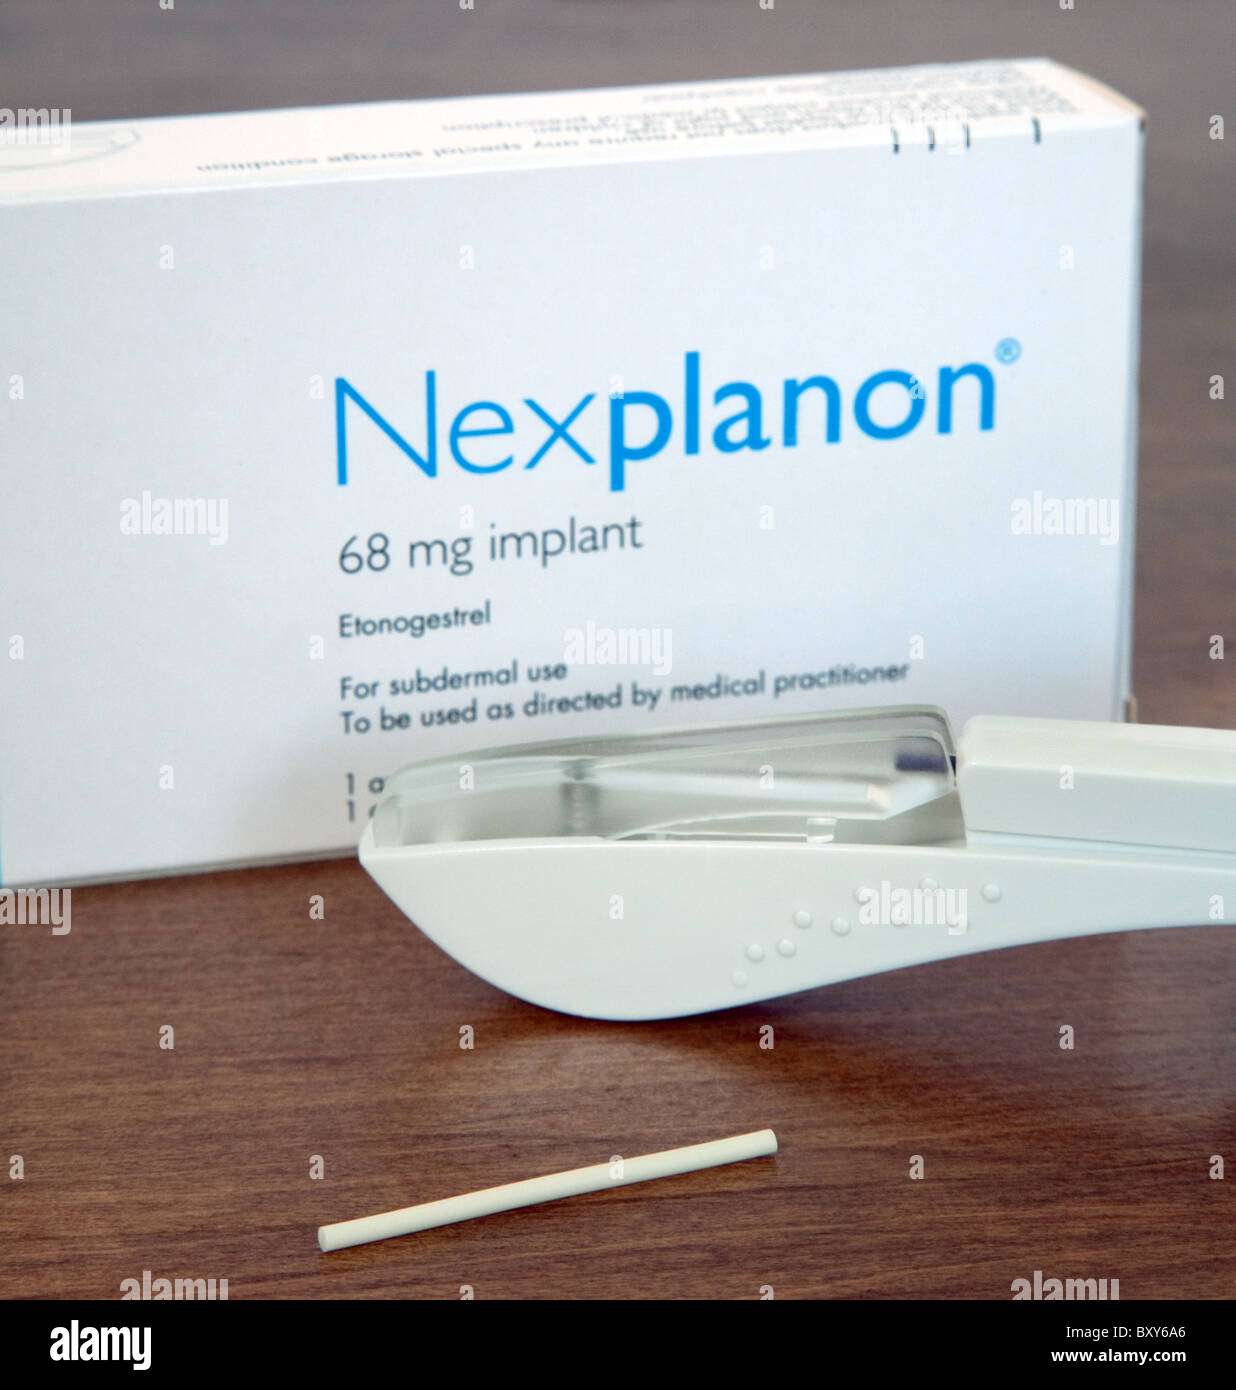 The Nexplanon female long term contraceptive implant for ...